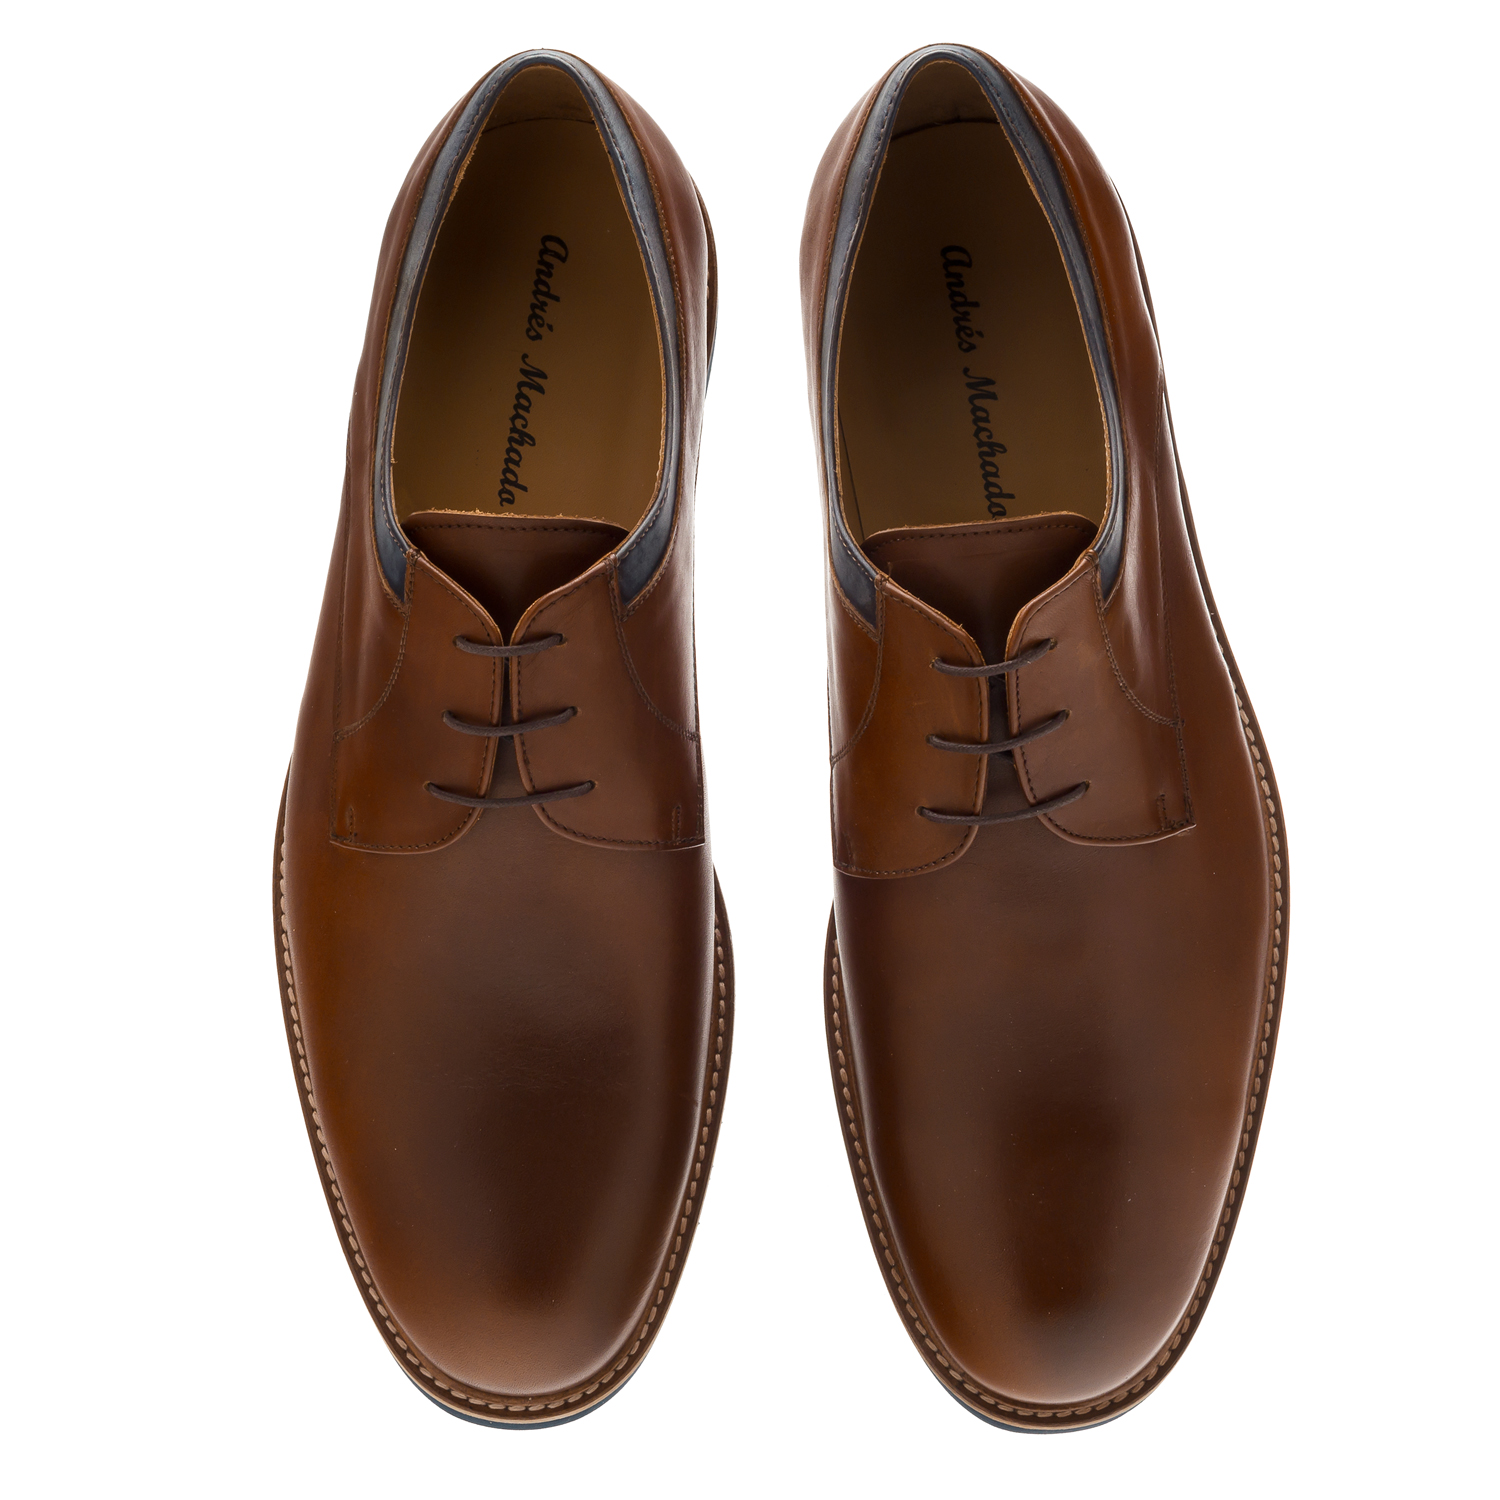 Chaussures Style Blucher en cuir Marron. 